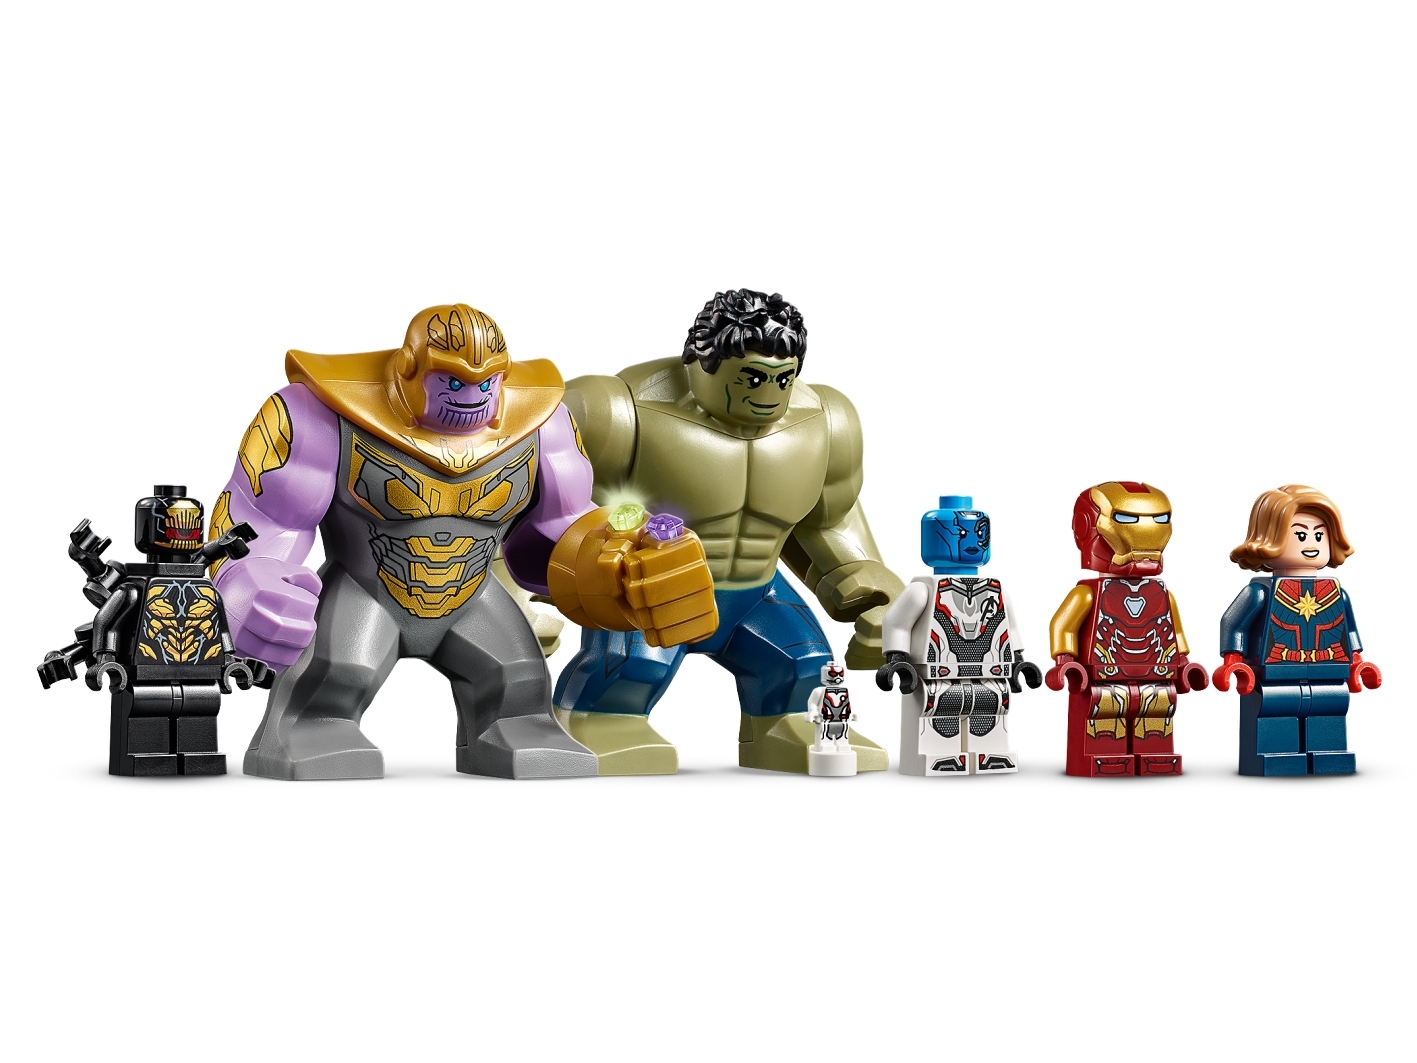 AUTHENTIC NEW LEGO THANOS Avengers Endgame Figure Minifigure fig Marvel 76131 